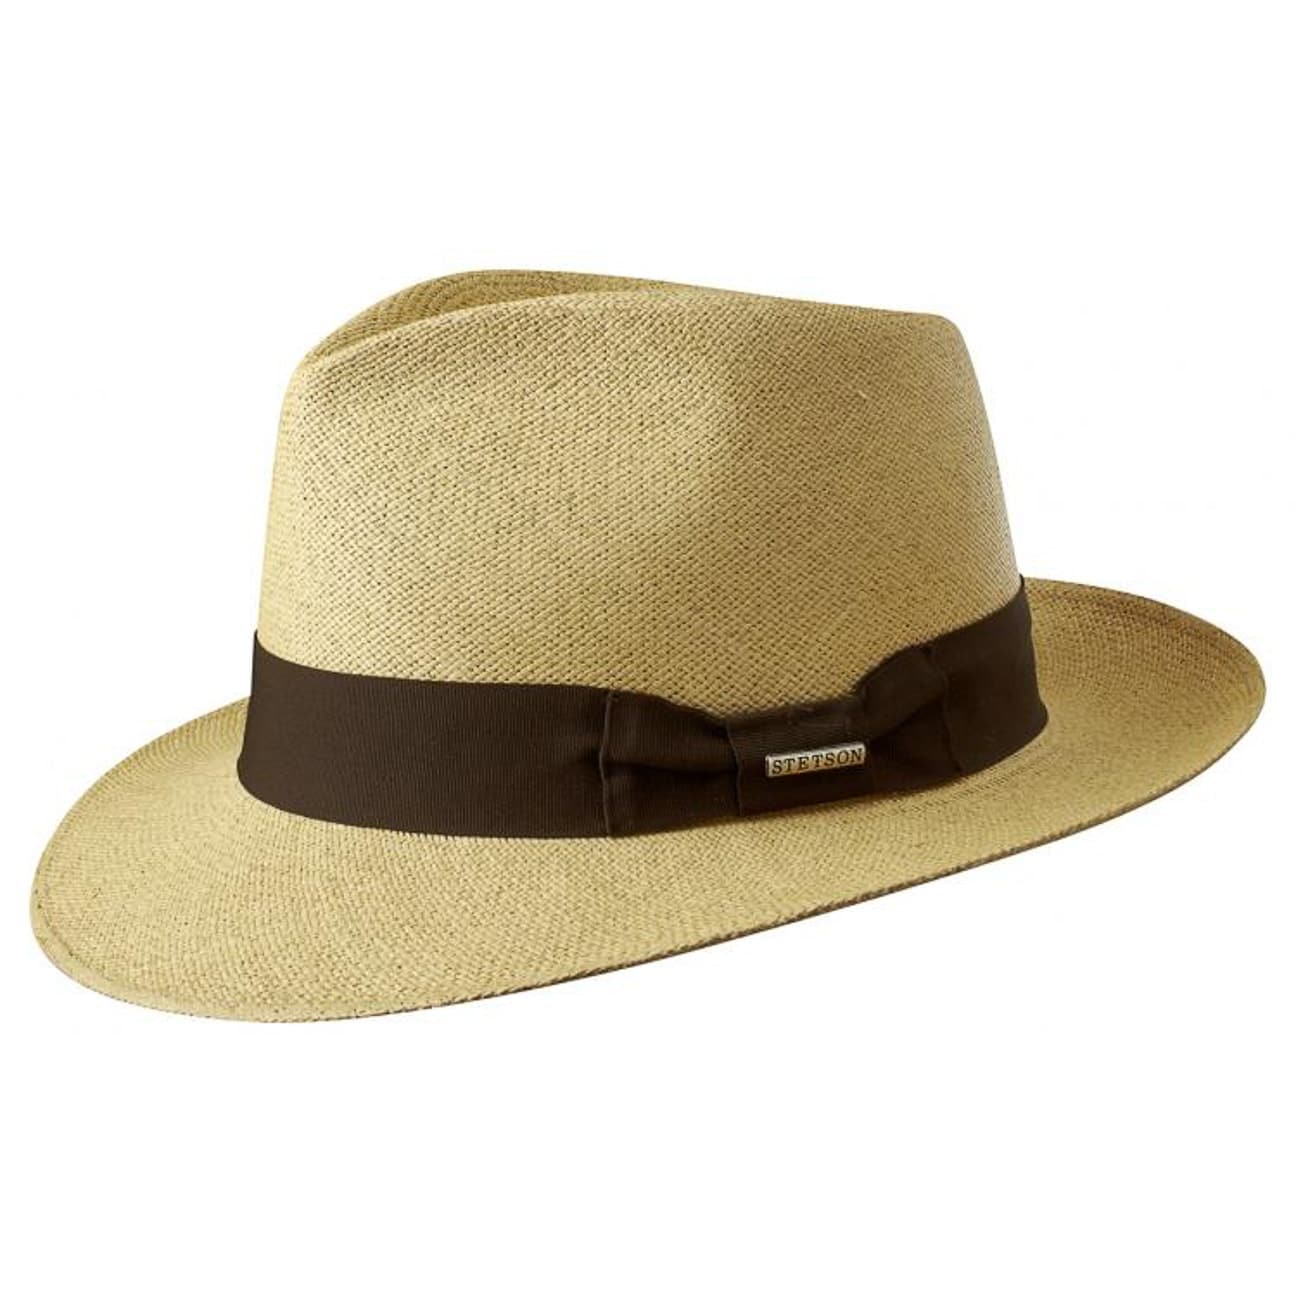 Towson Panama Hat by Stetson - 129,00